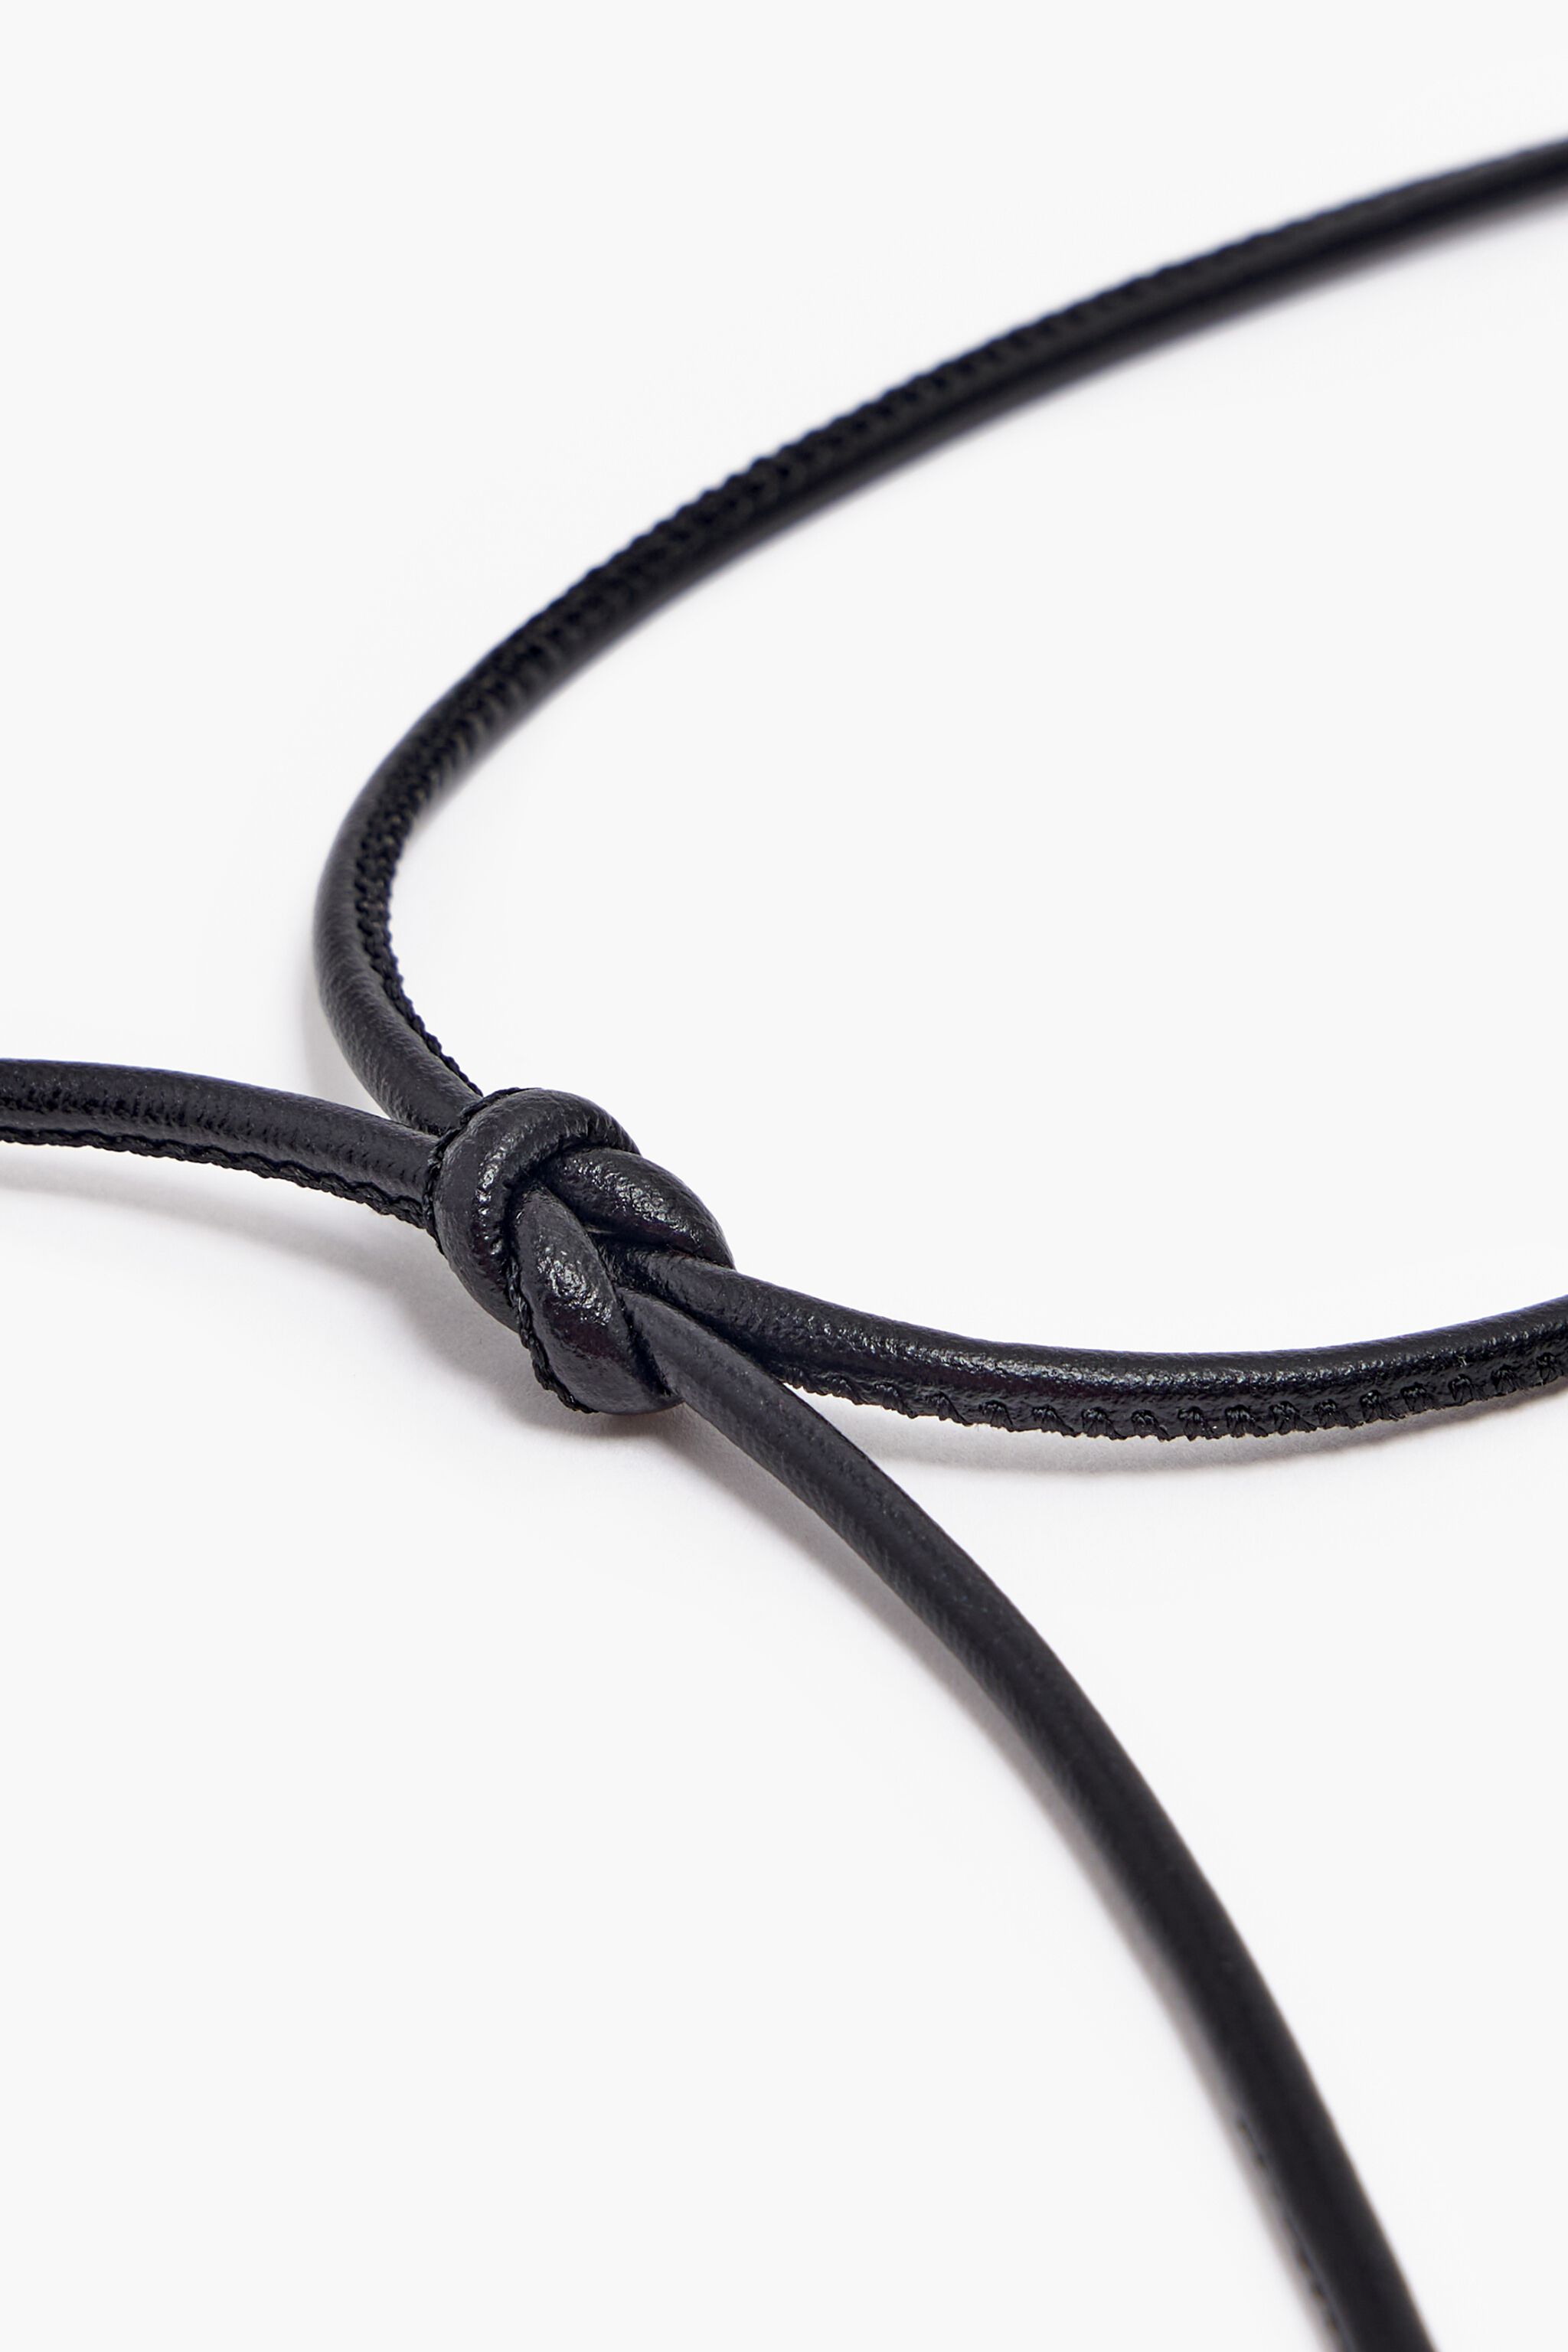 Buy Silver or Gold Black Cord Set / Black Cord Necklace / Black Choker /  Cord Choker / Leather Choker / Thin Black Choker /black Choker Necklace  Online in India - Etsy